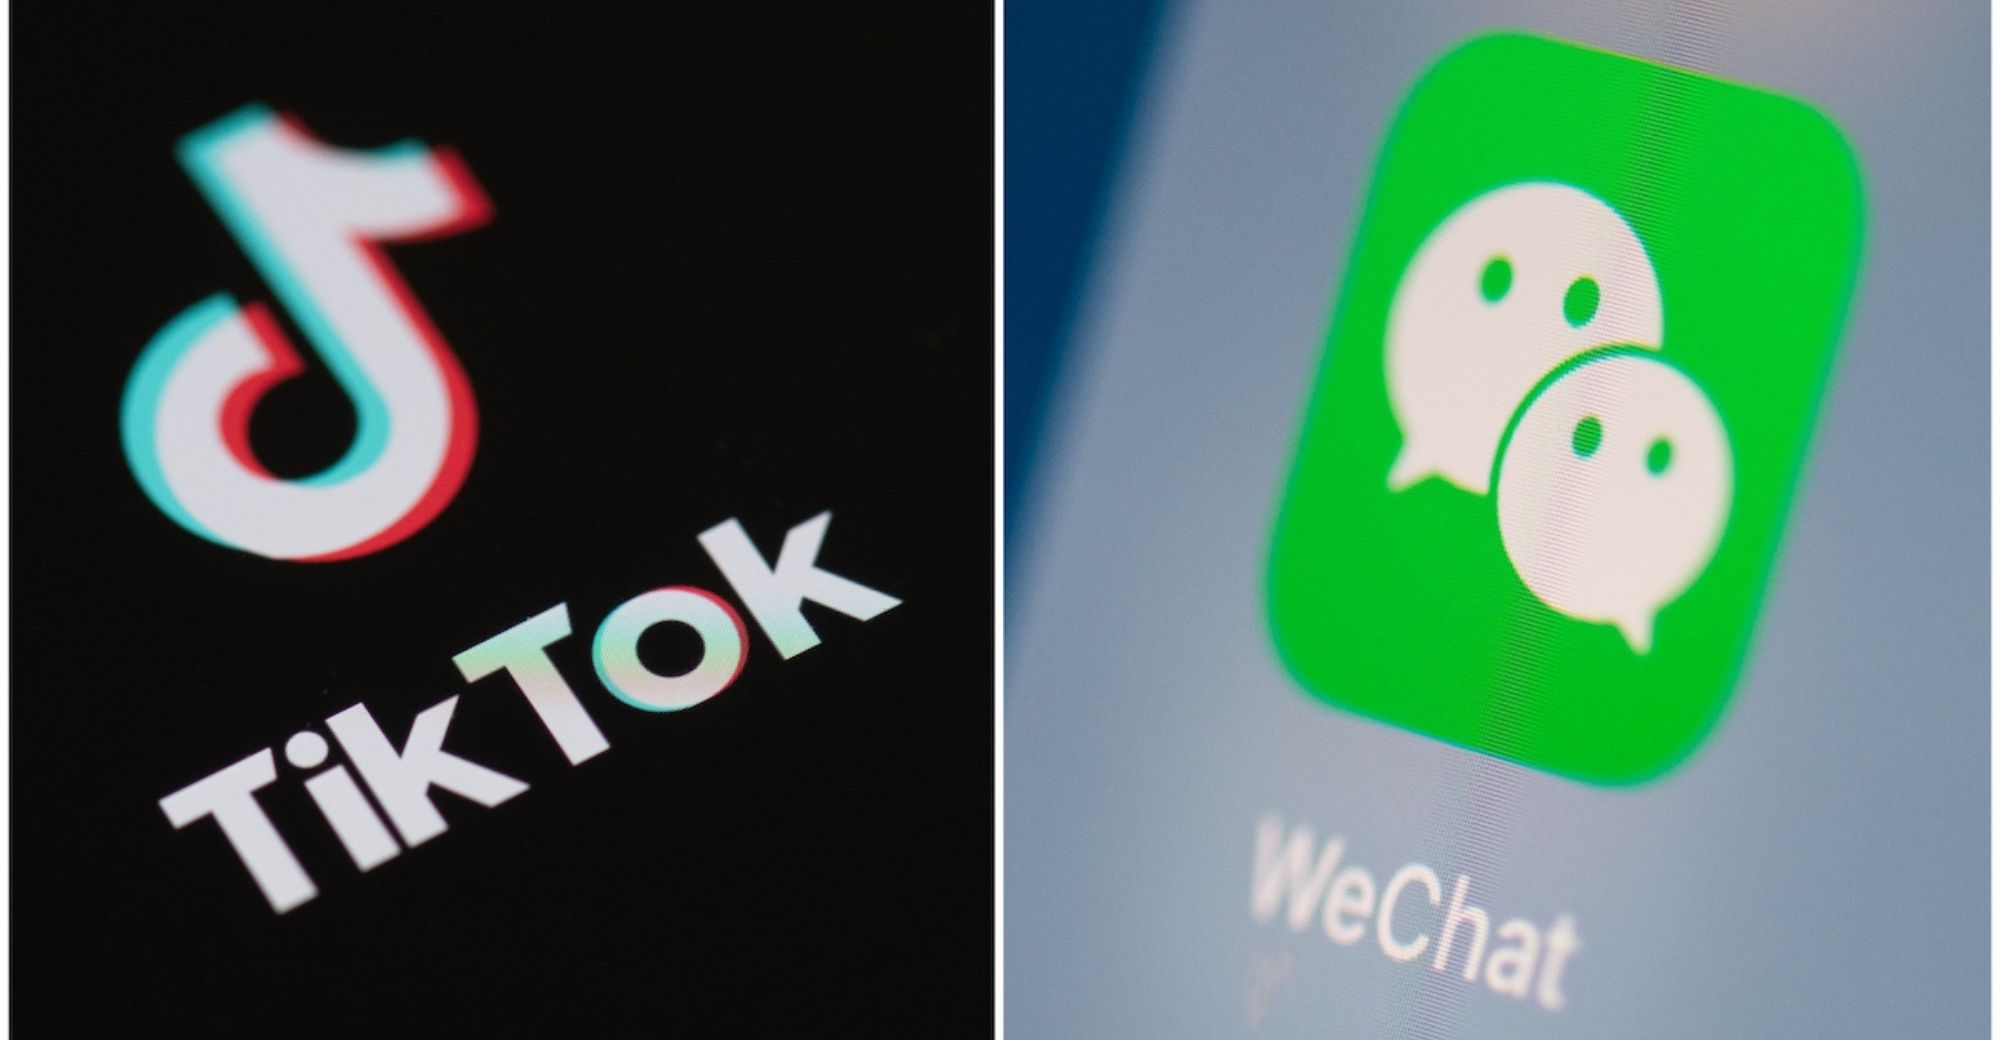 Vibrato น้องสาว App Vibrato ปฏิเสธการขโมยห่วงโซ่ความสัมพันธ์ Tencent